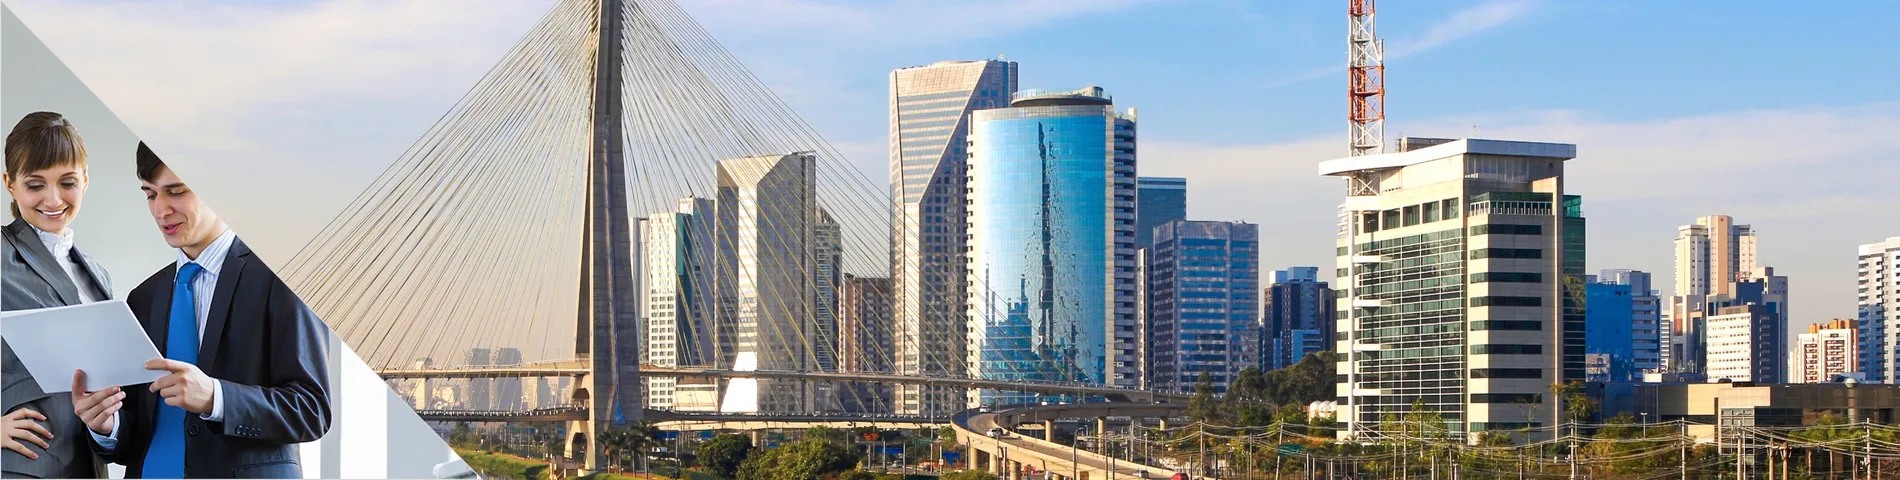 Sao Paulo - Business Privat